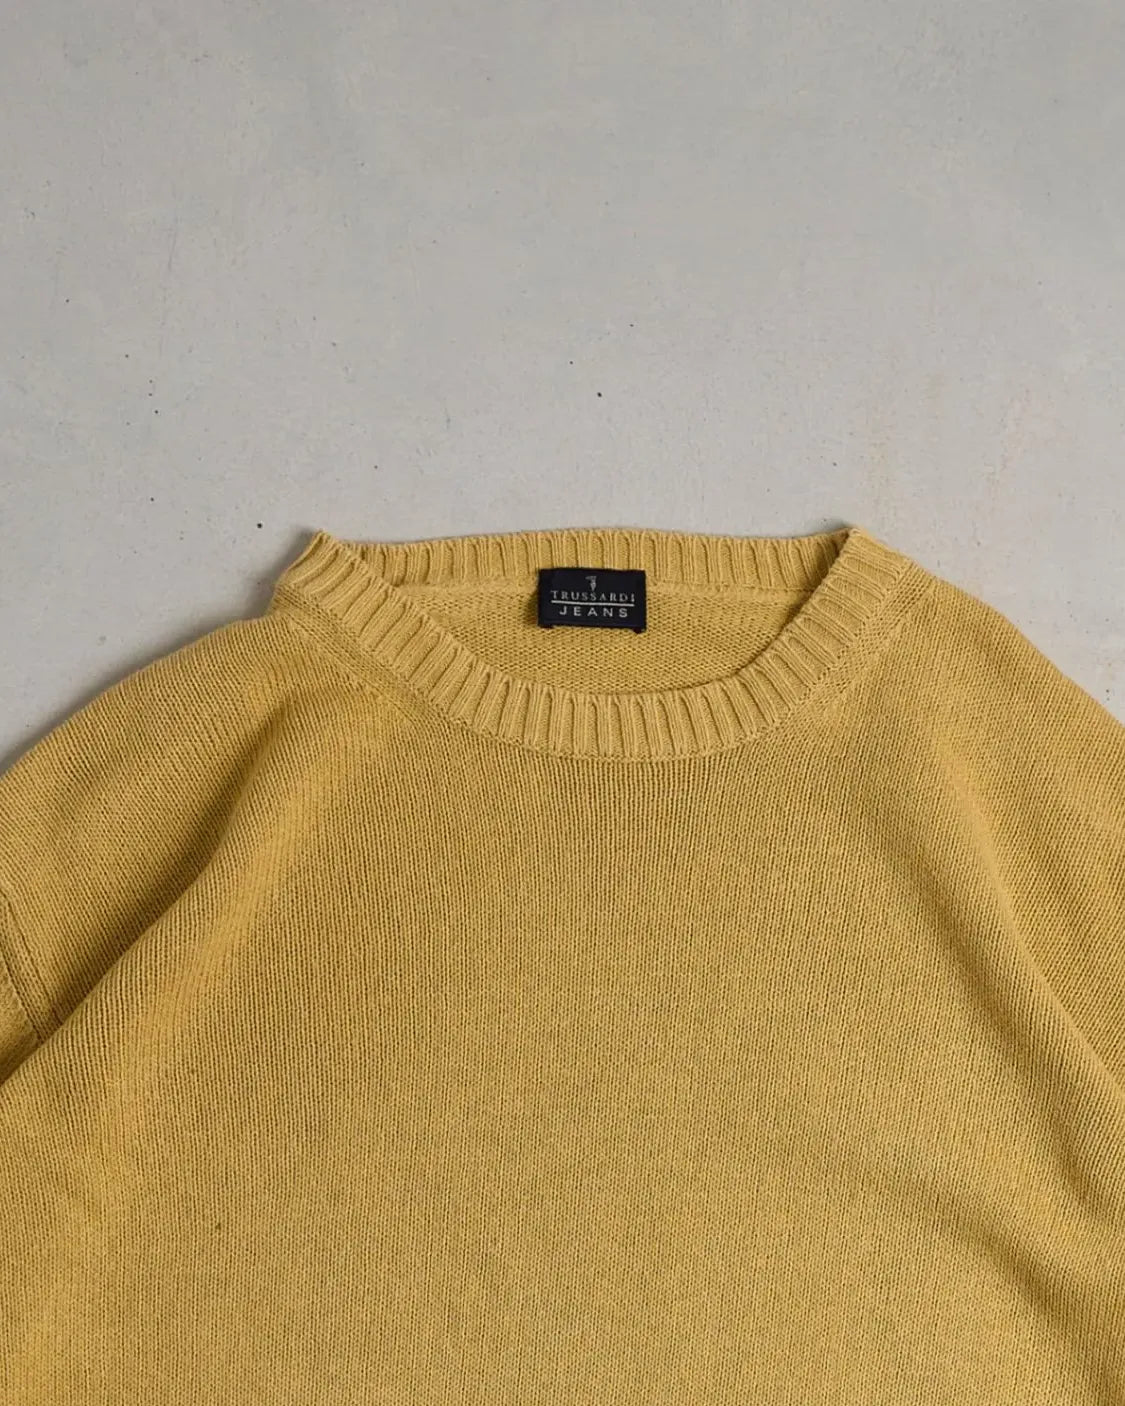 Vintage Trussardi Sweater Top